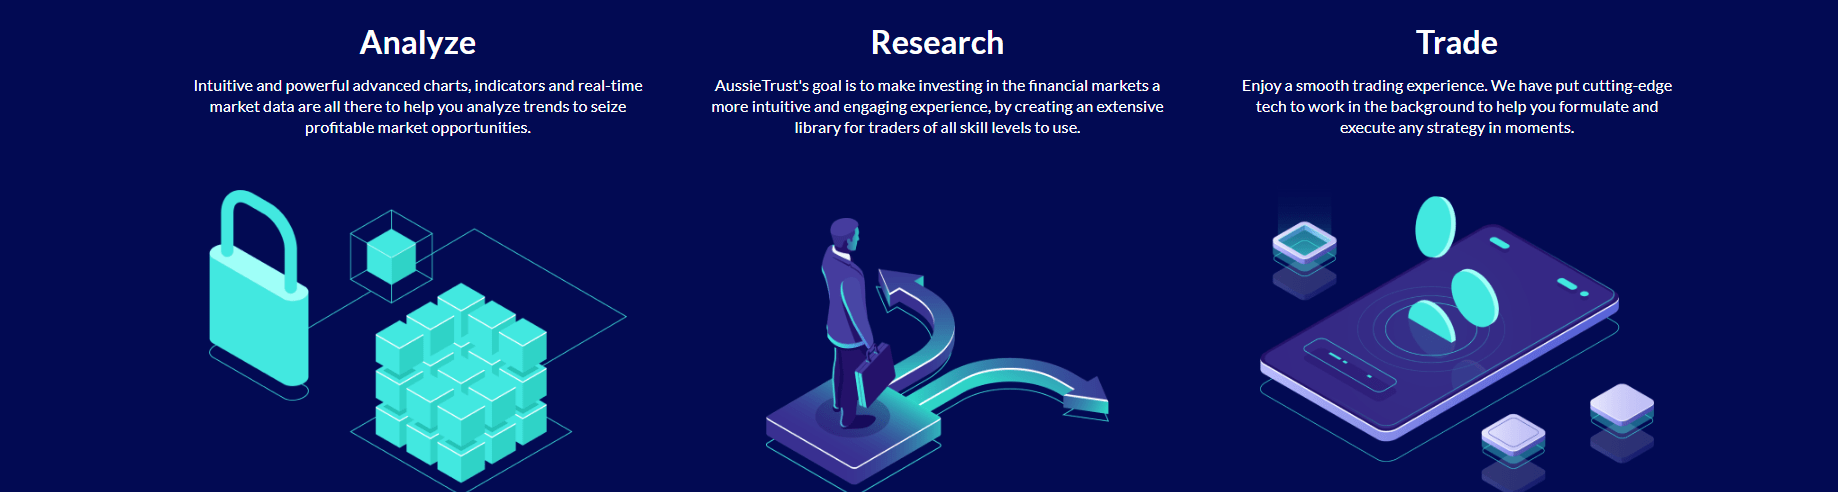 AussieTrust analyze research trade